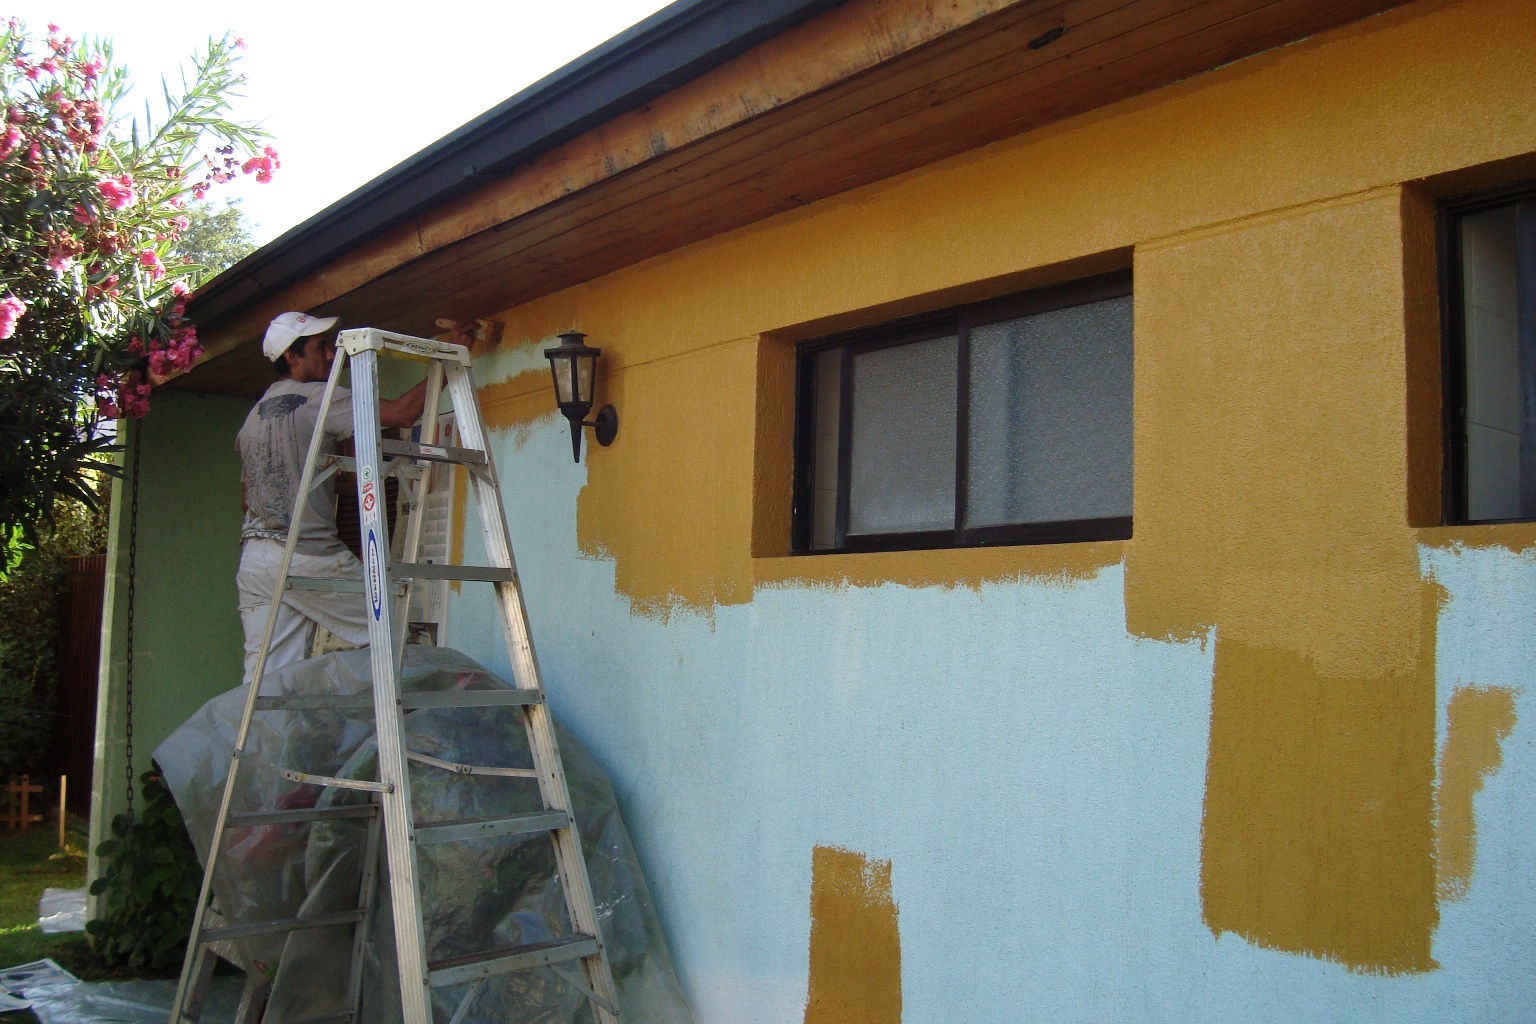 Construcción total: Pintura de obra (interior exterior)